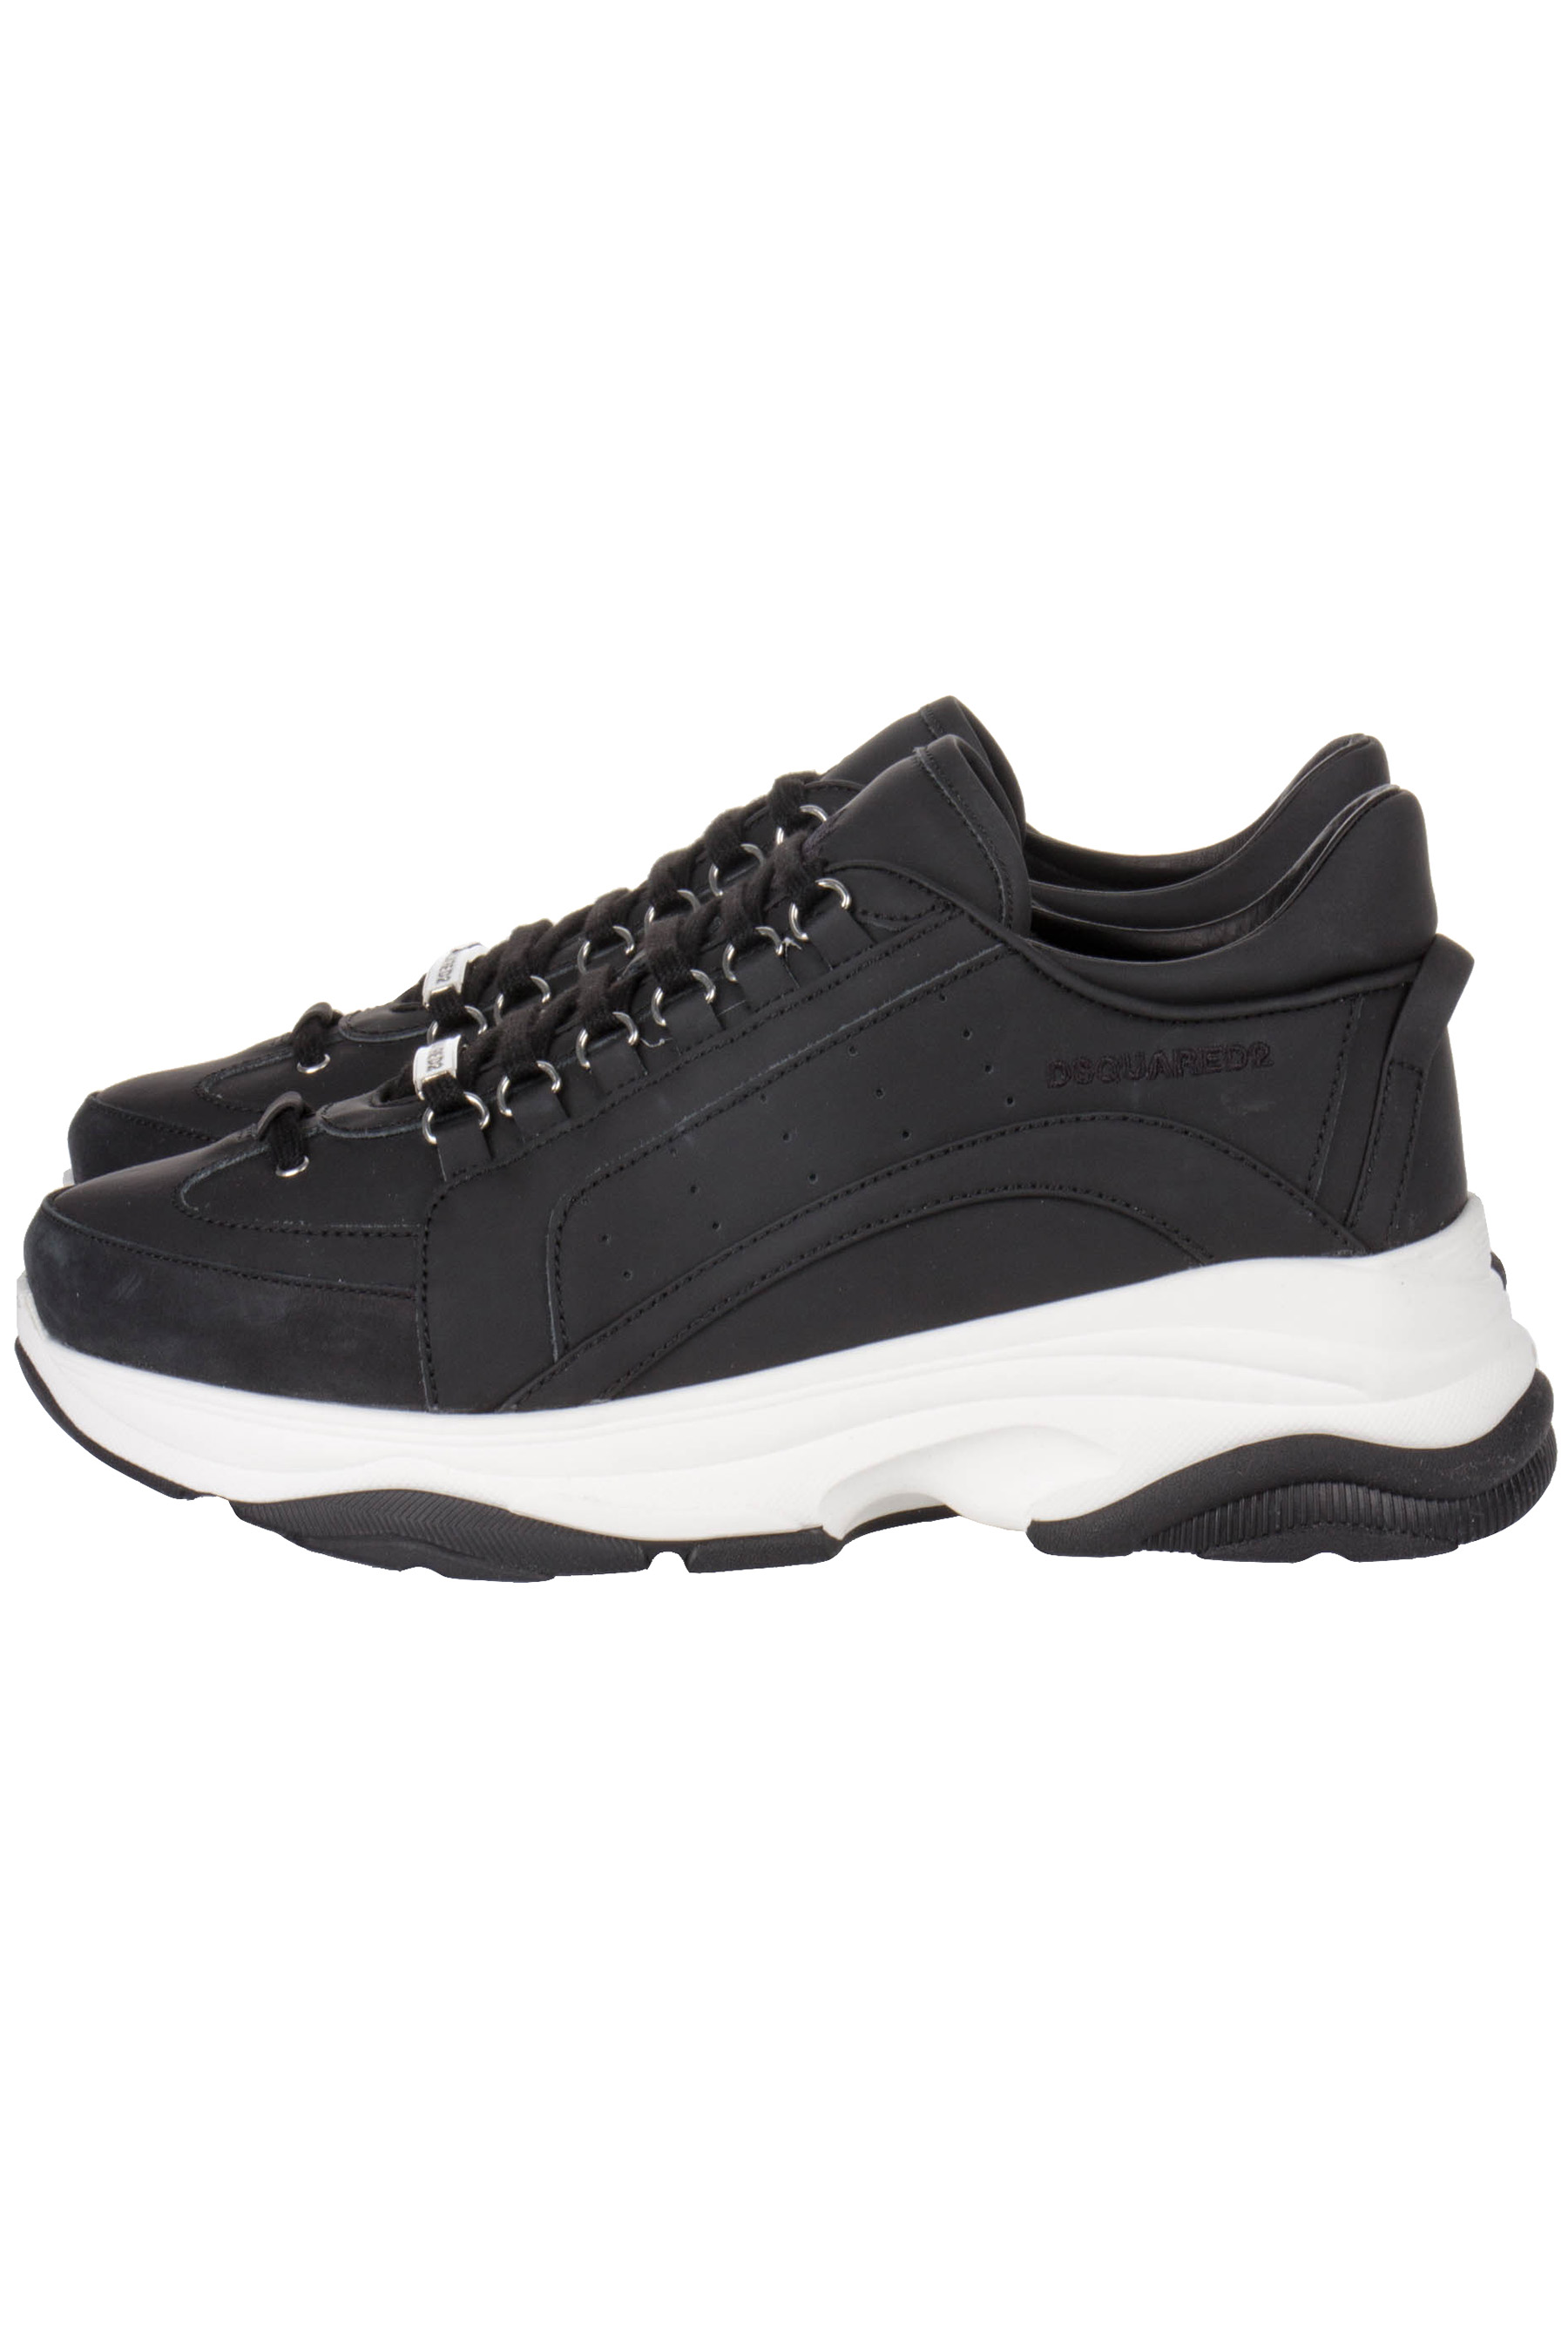 DSQUARED2 Sneakers Bumpy 551 | MEN | Sale | mientus Online Store